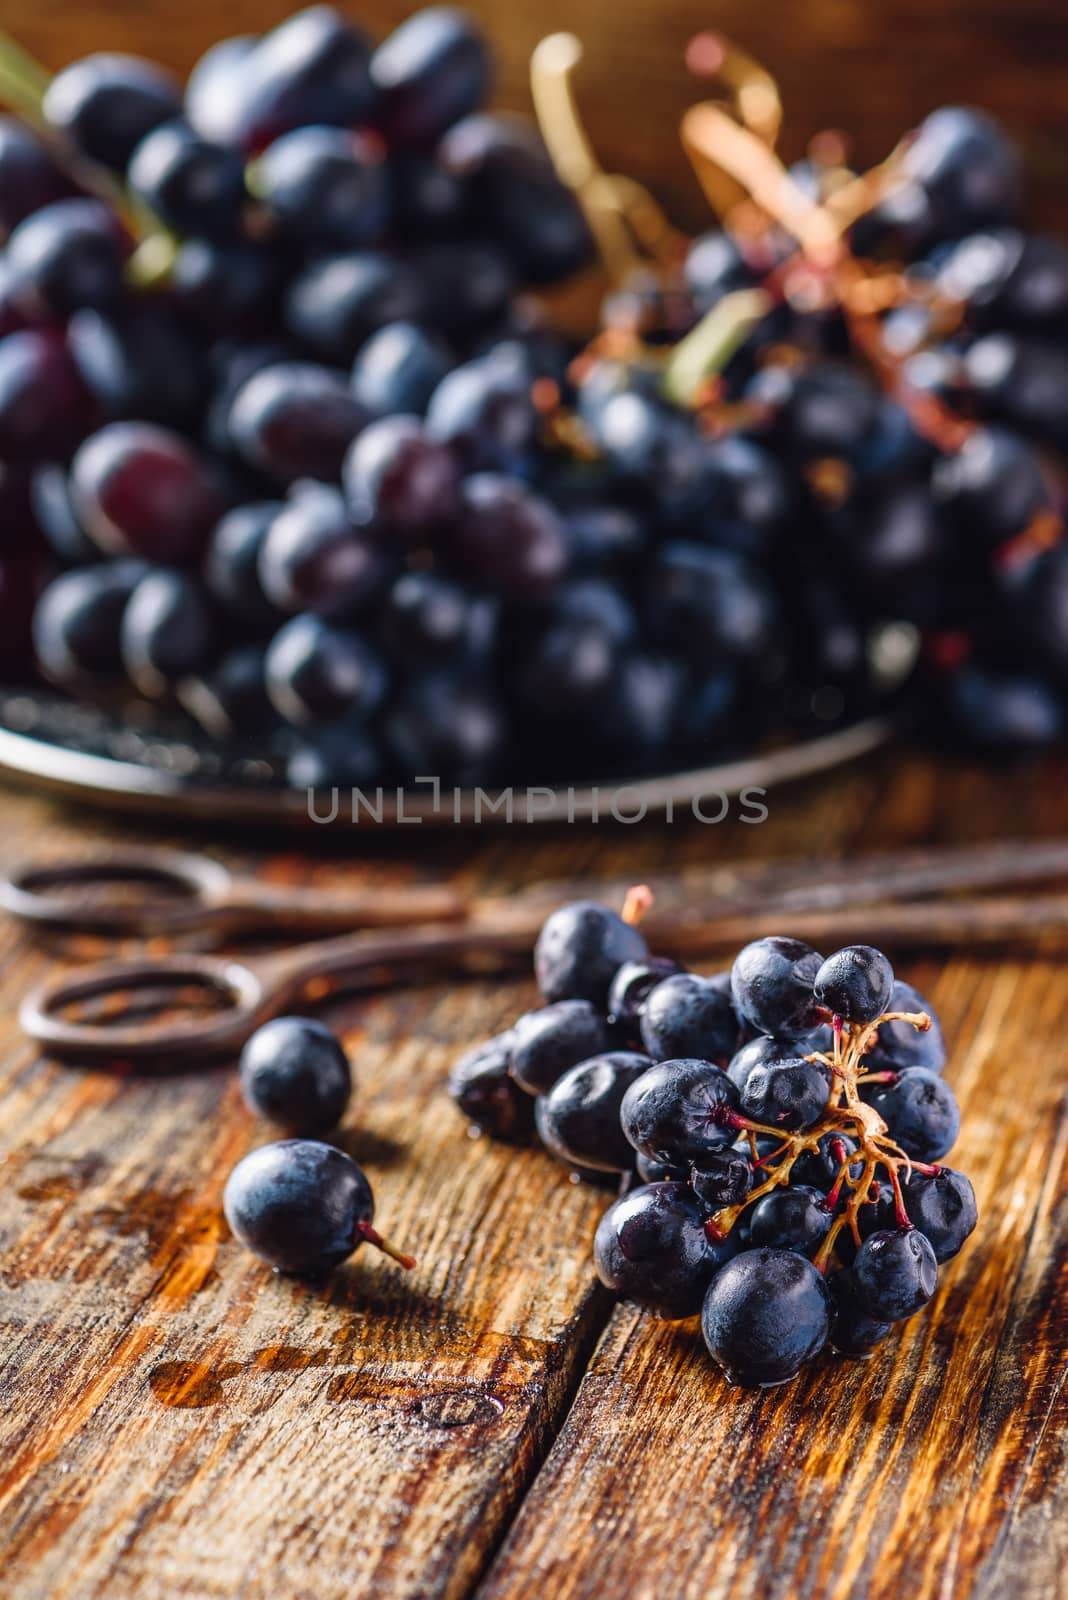 Blue Vine Grapes and Rusty Scissors. Vertical Orientation.